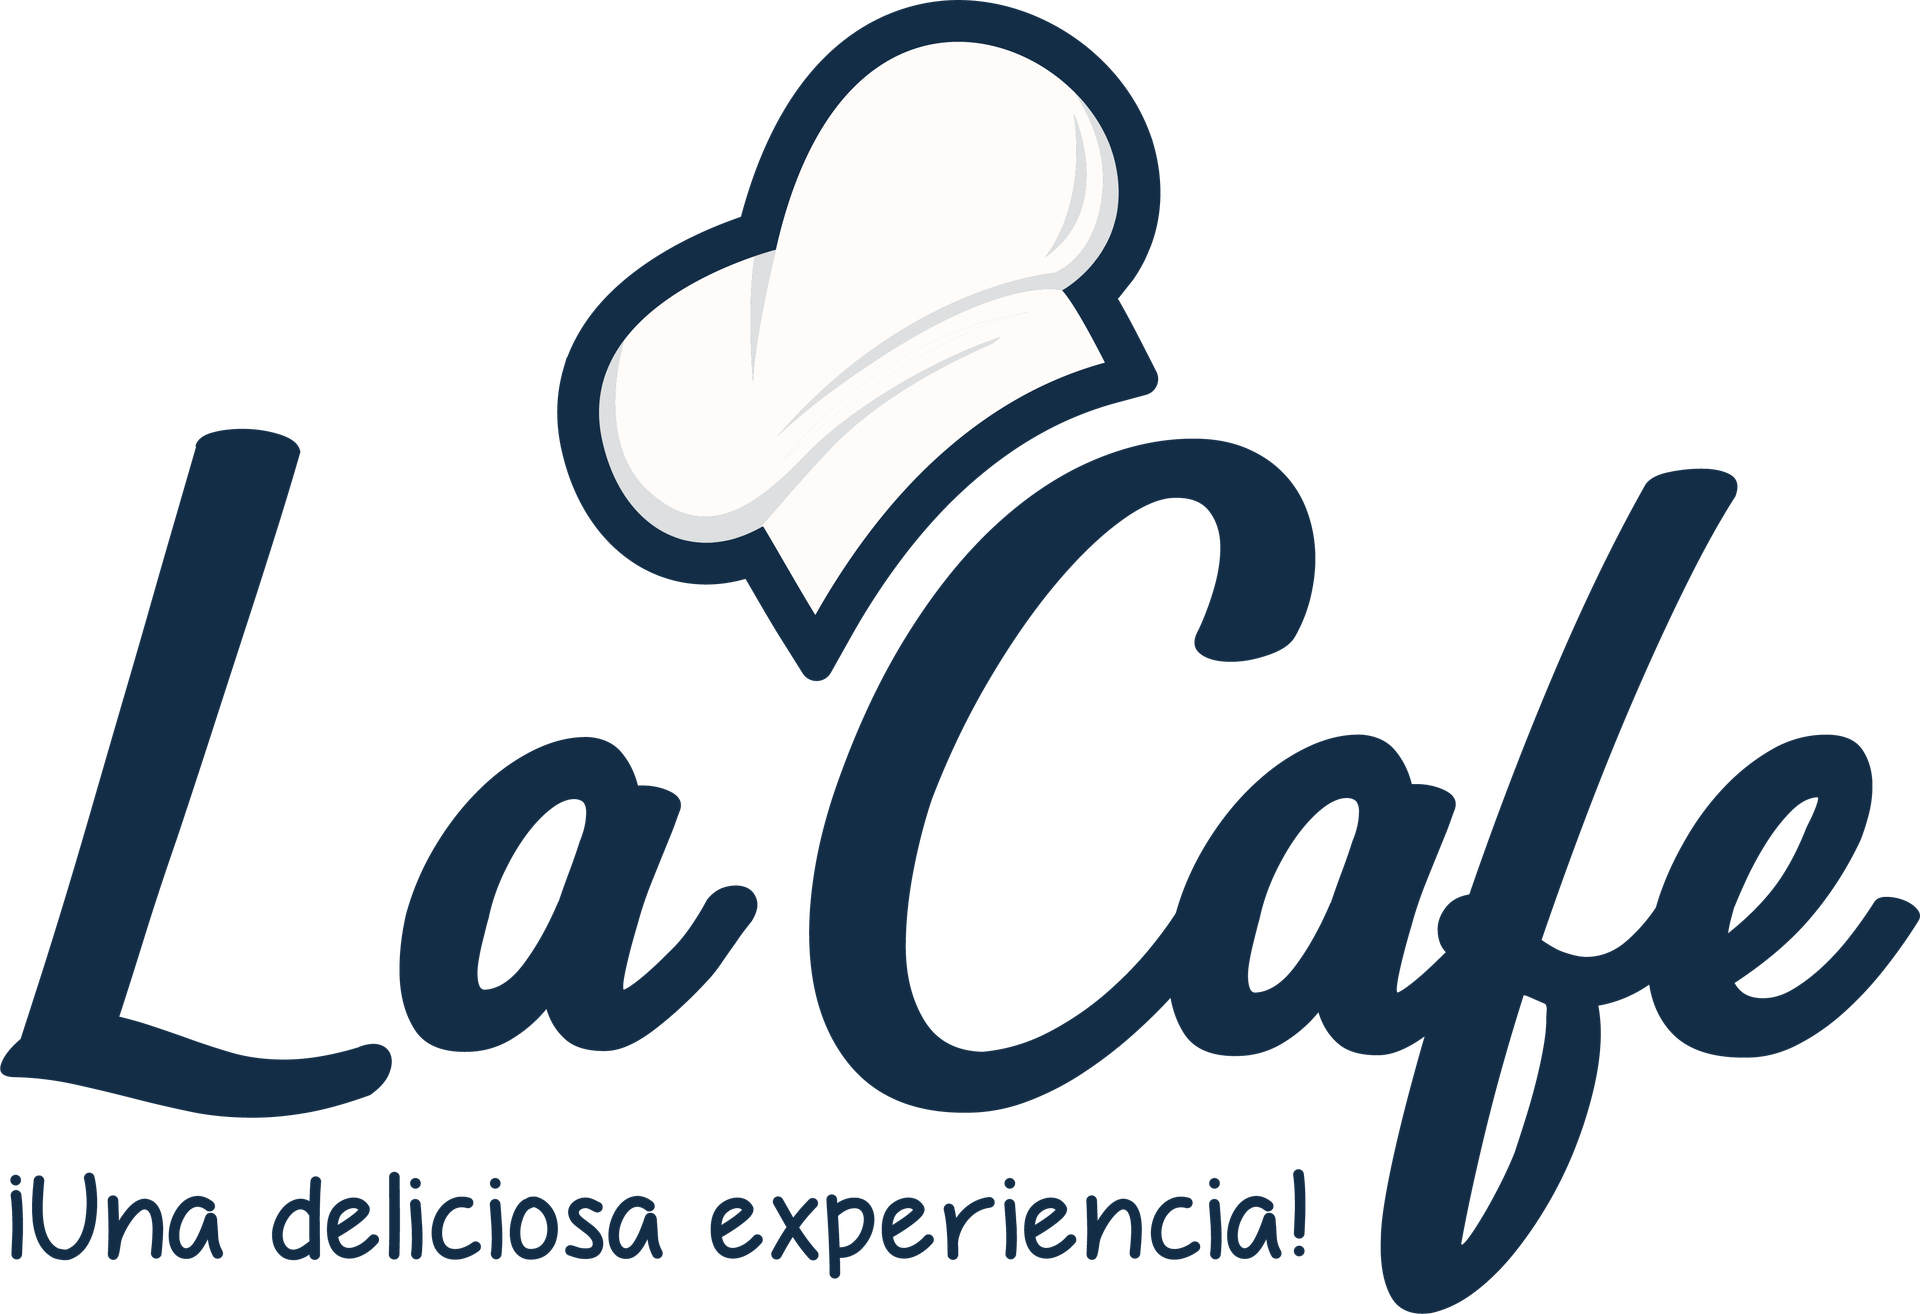 La Cafe San Cristobal